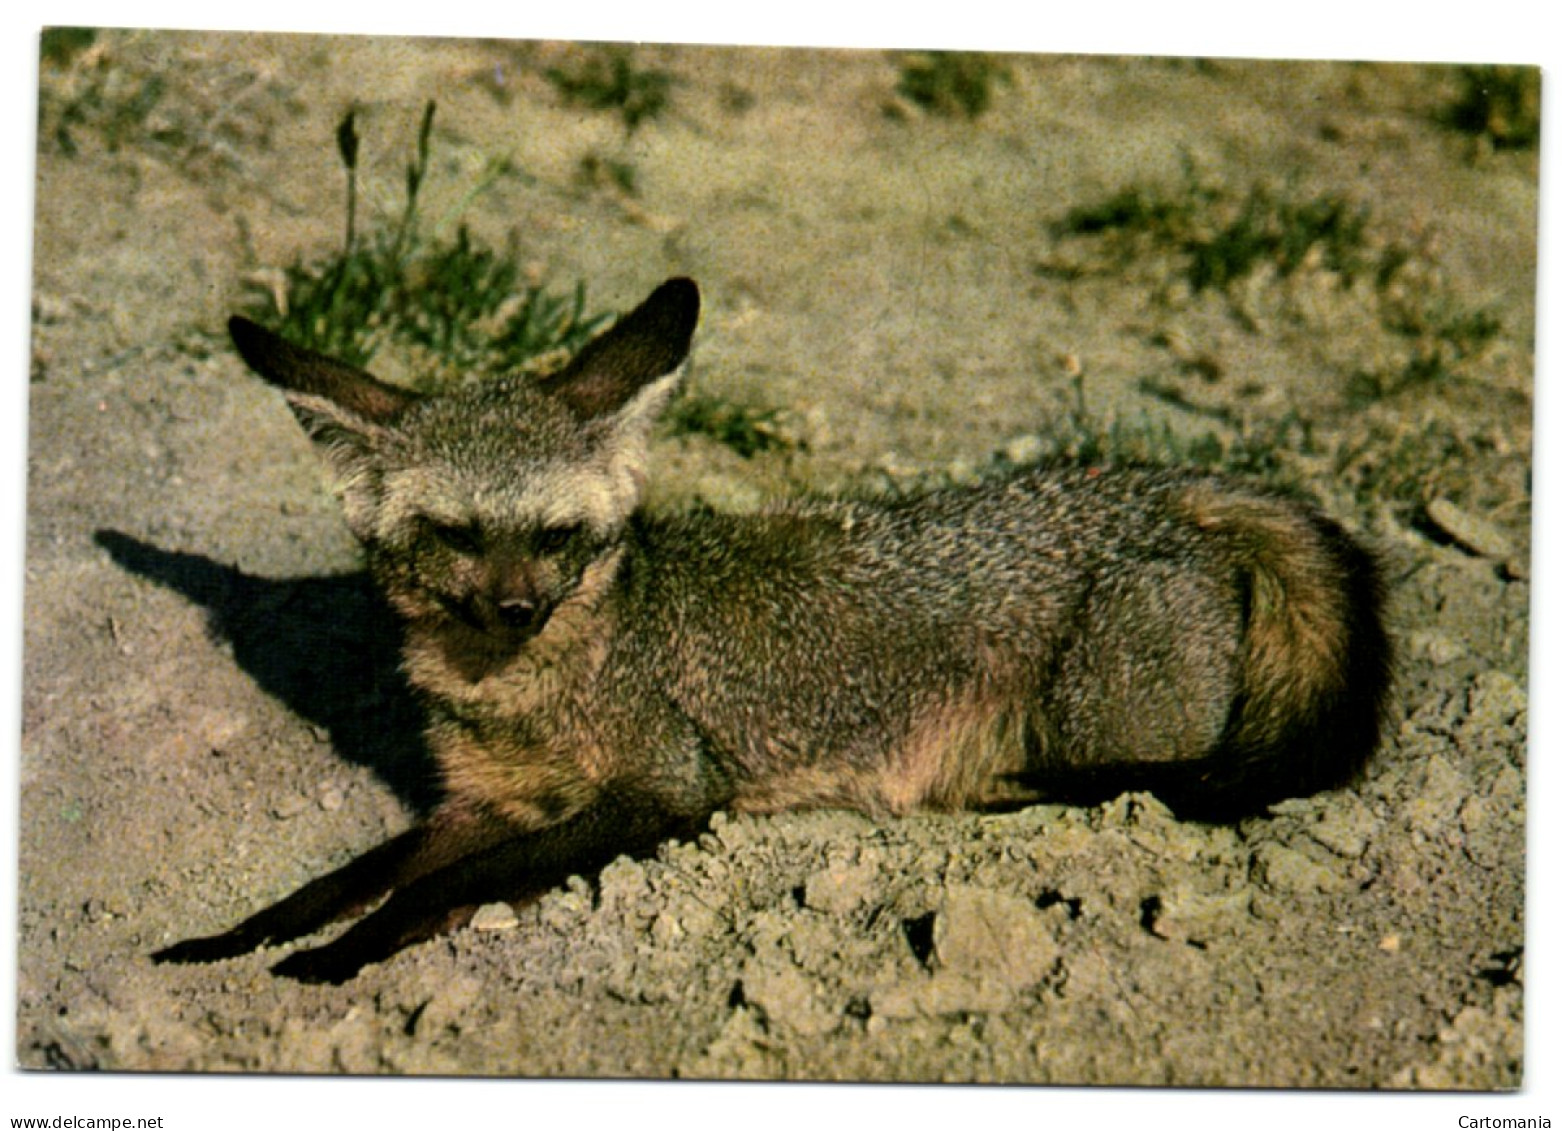 African Wild Life - Bat-Eared Fox - Kenya